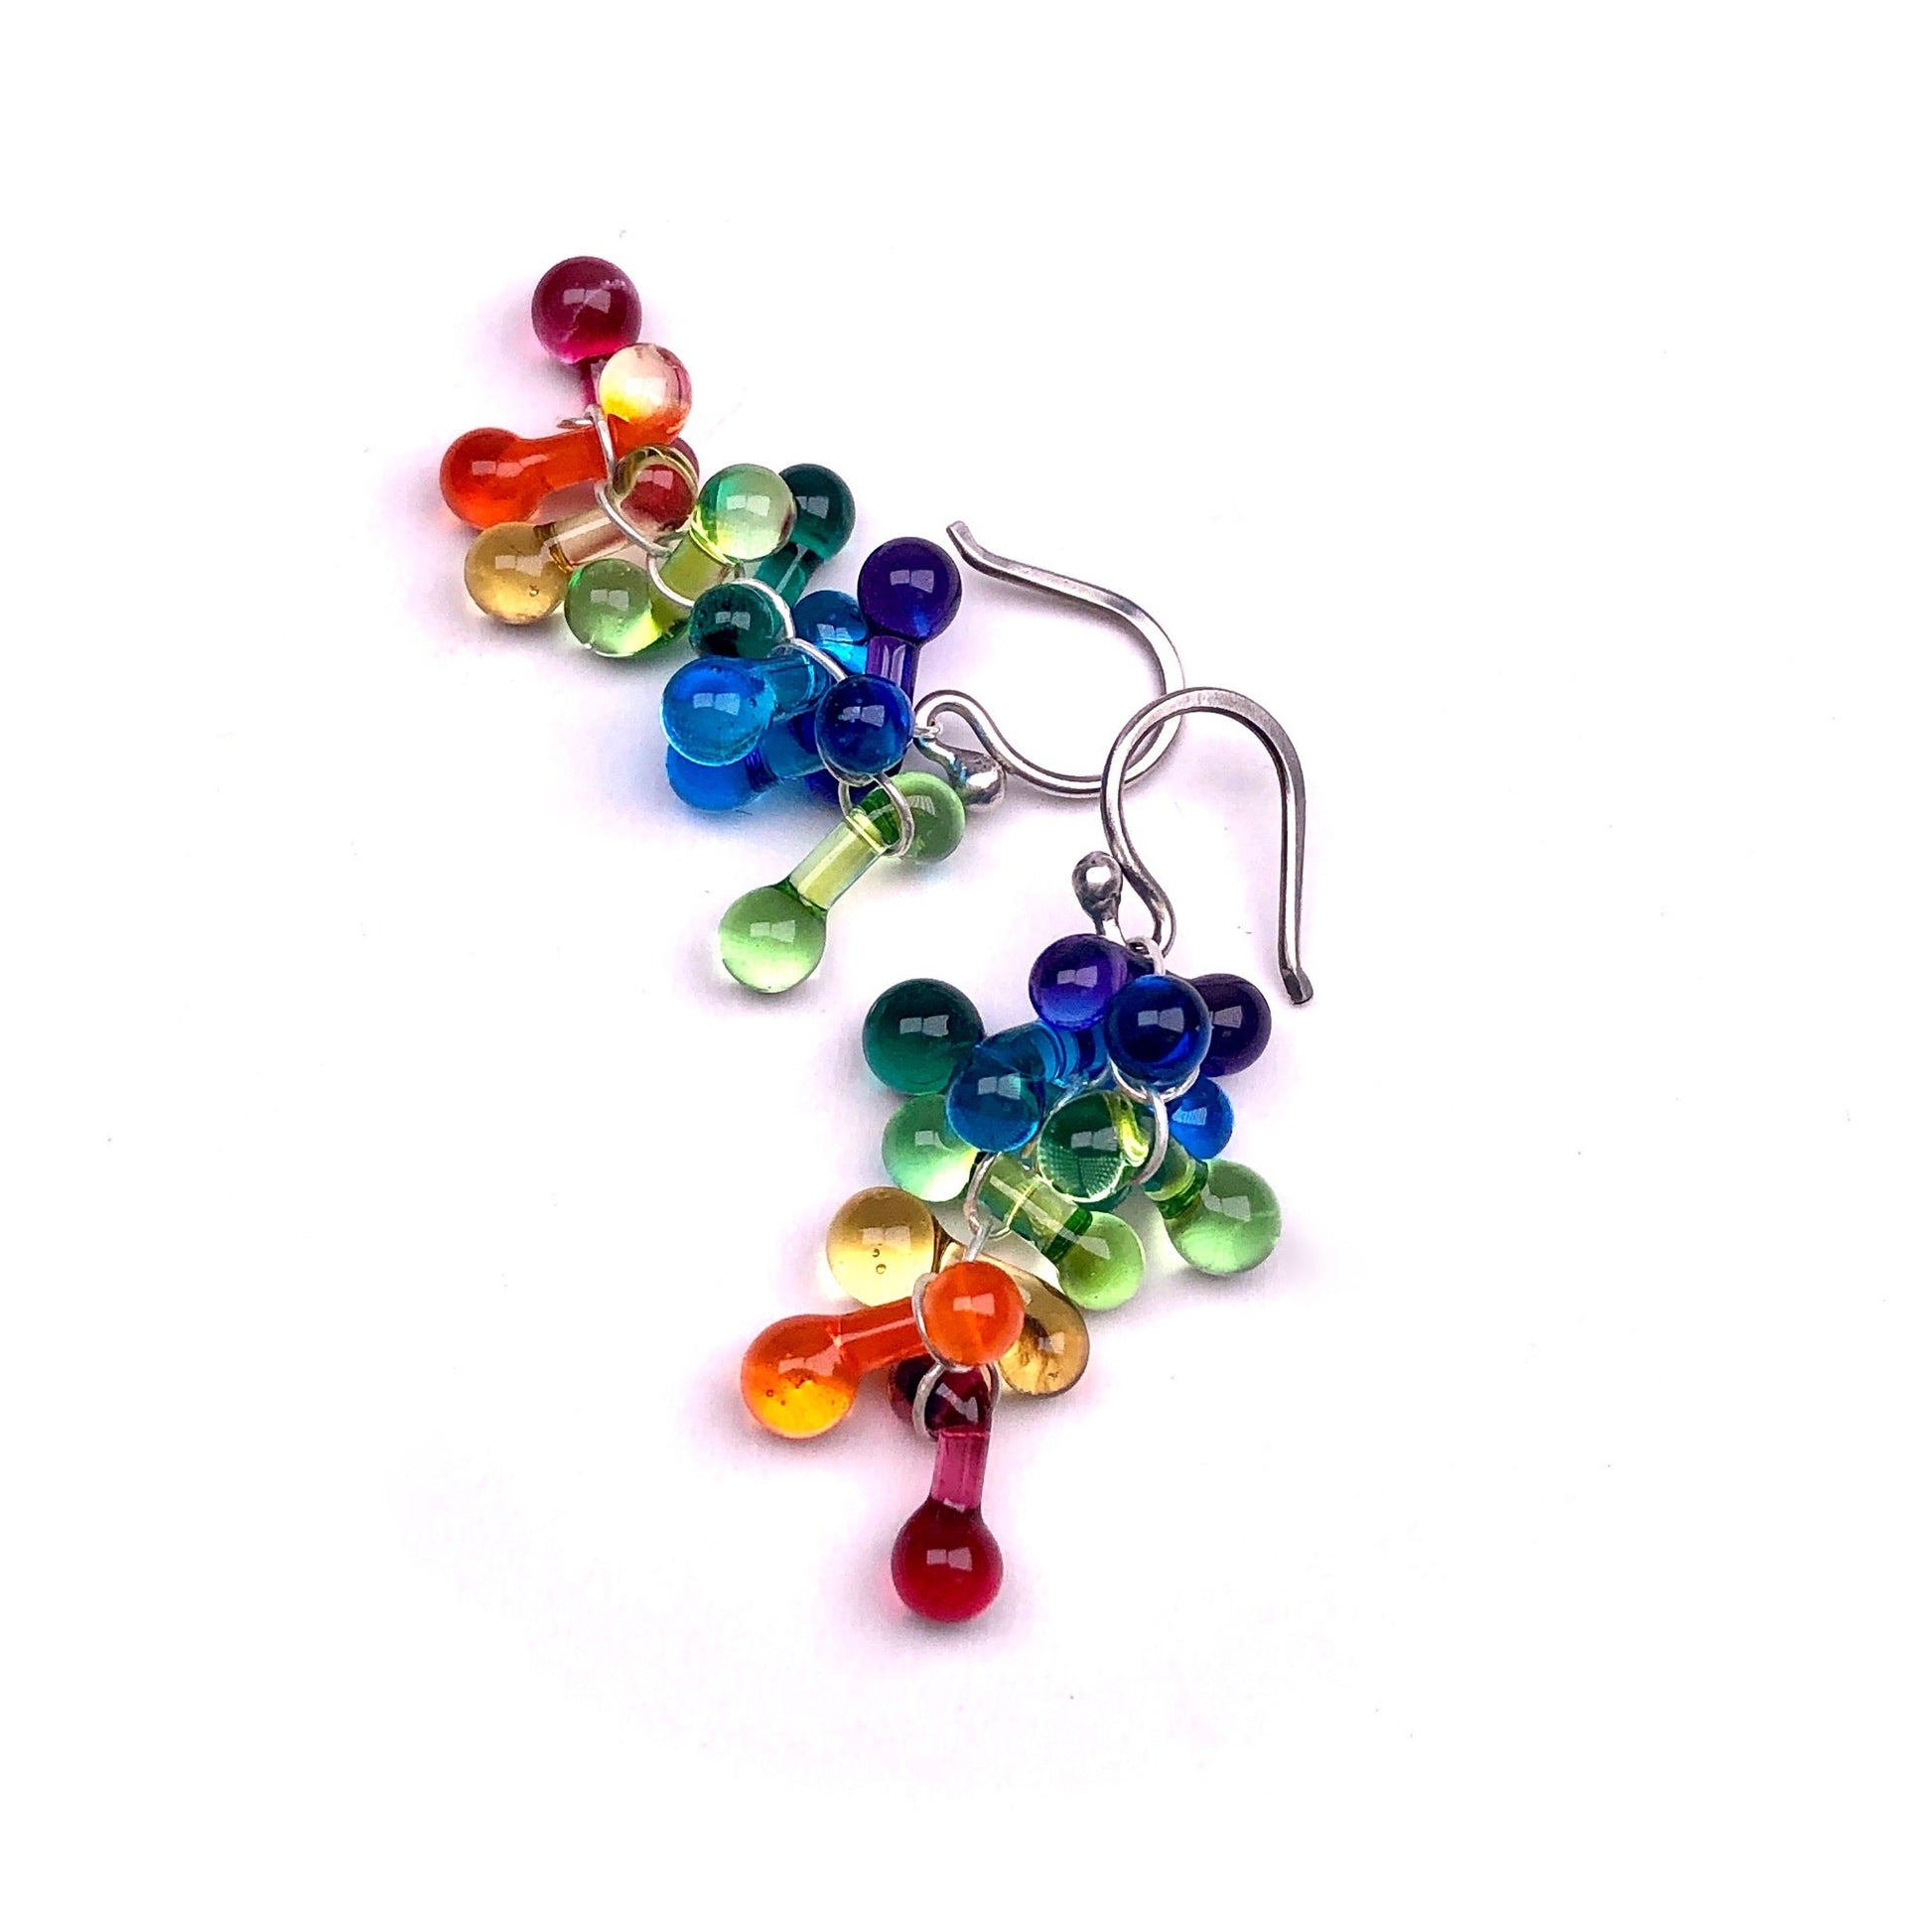 Rossetti Playa Rainbow Earrings - Chrysler Museum of Art Shop